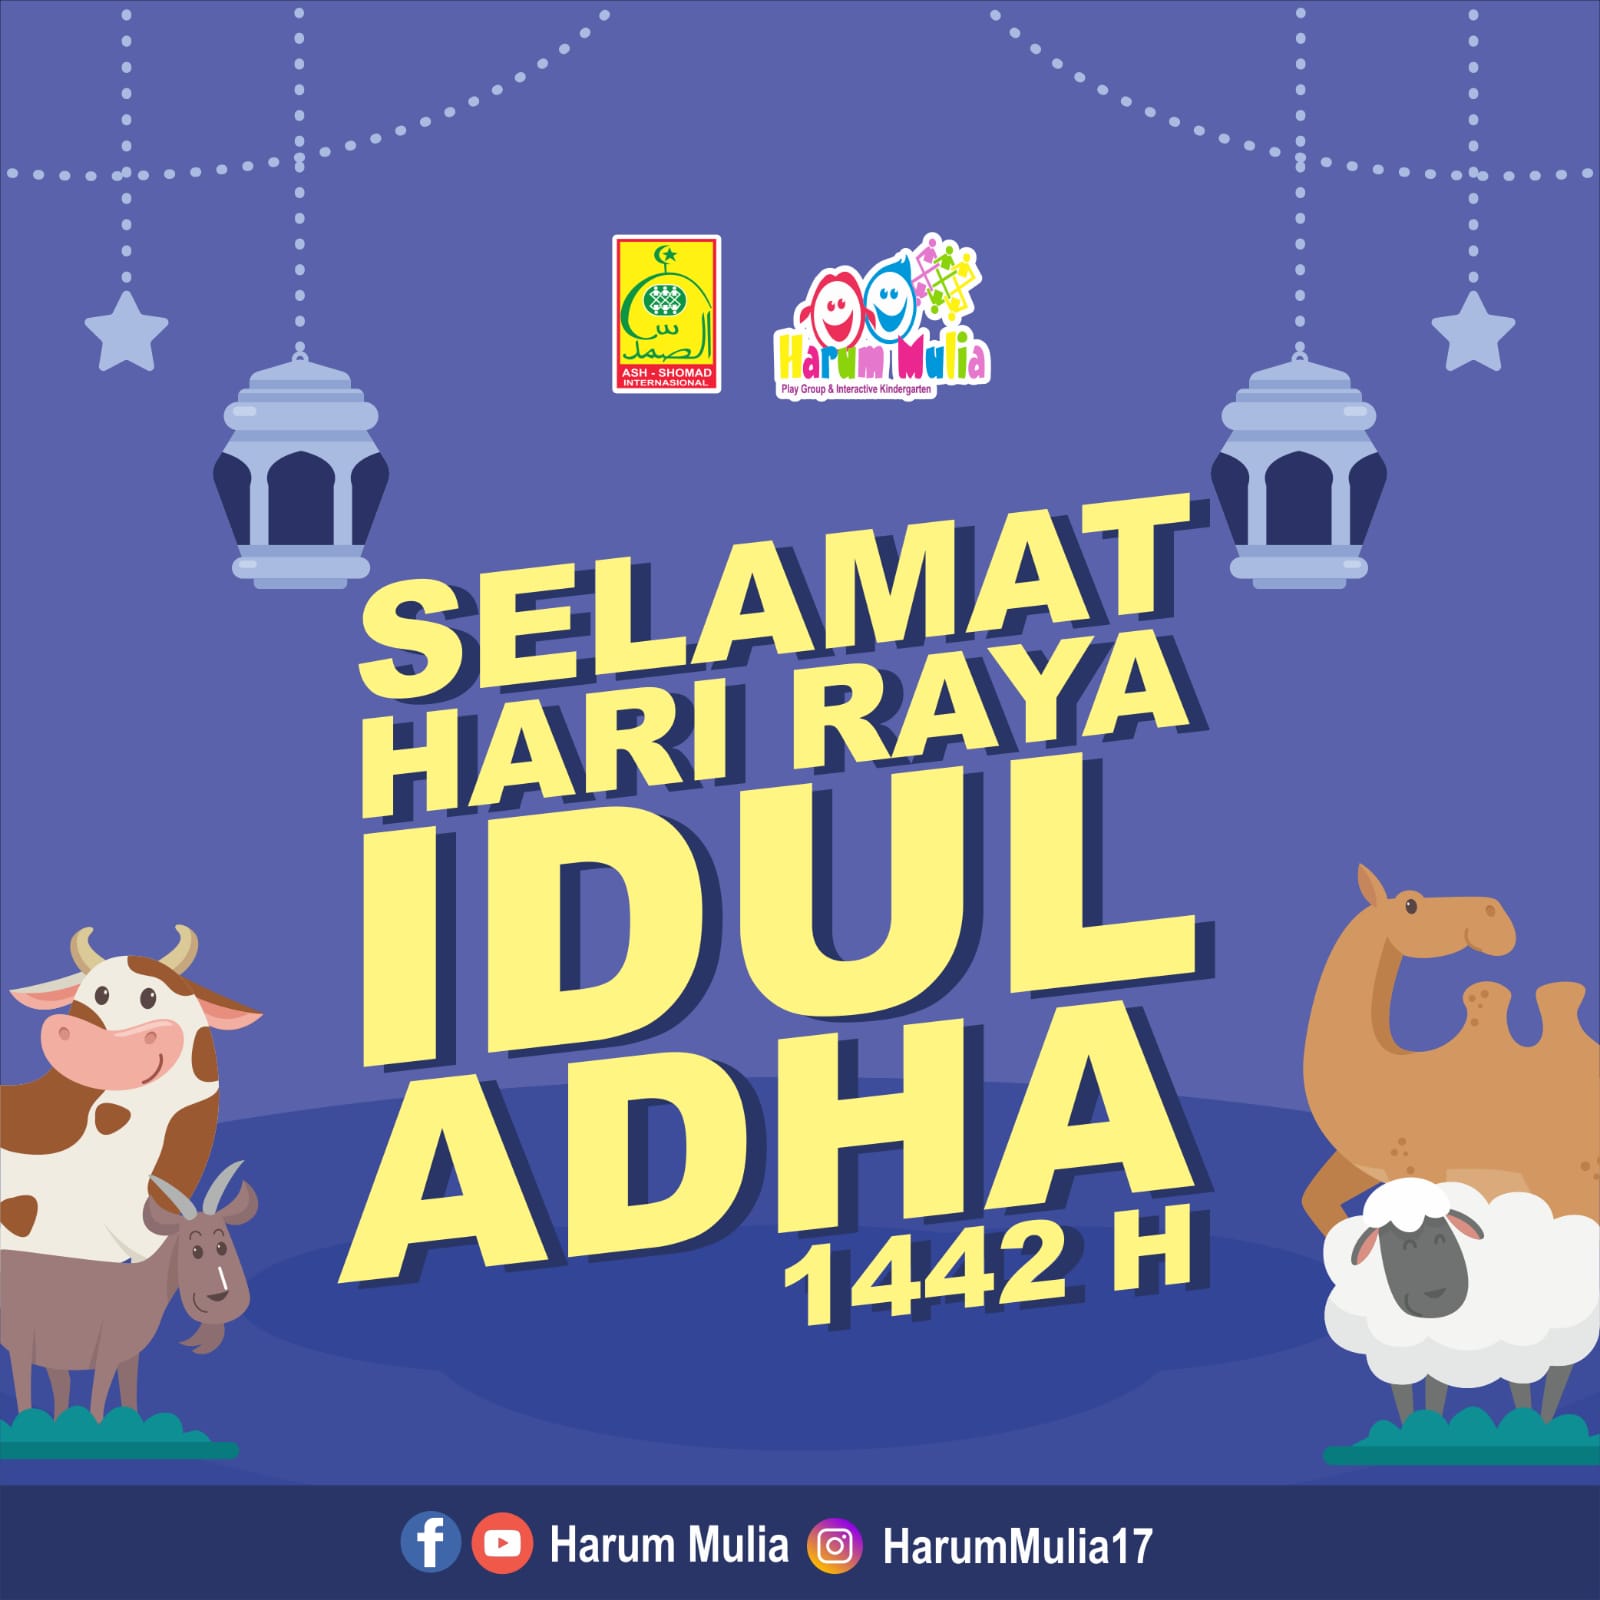 Selamat Hari Raya Idul Adha 1442 H.